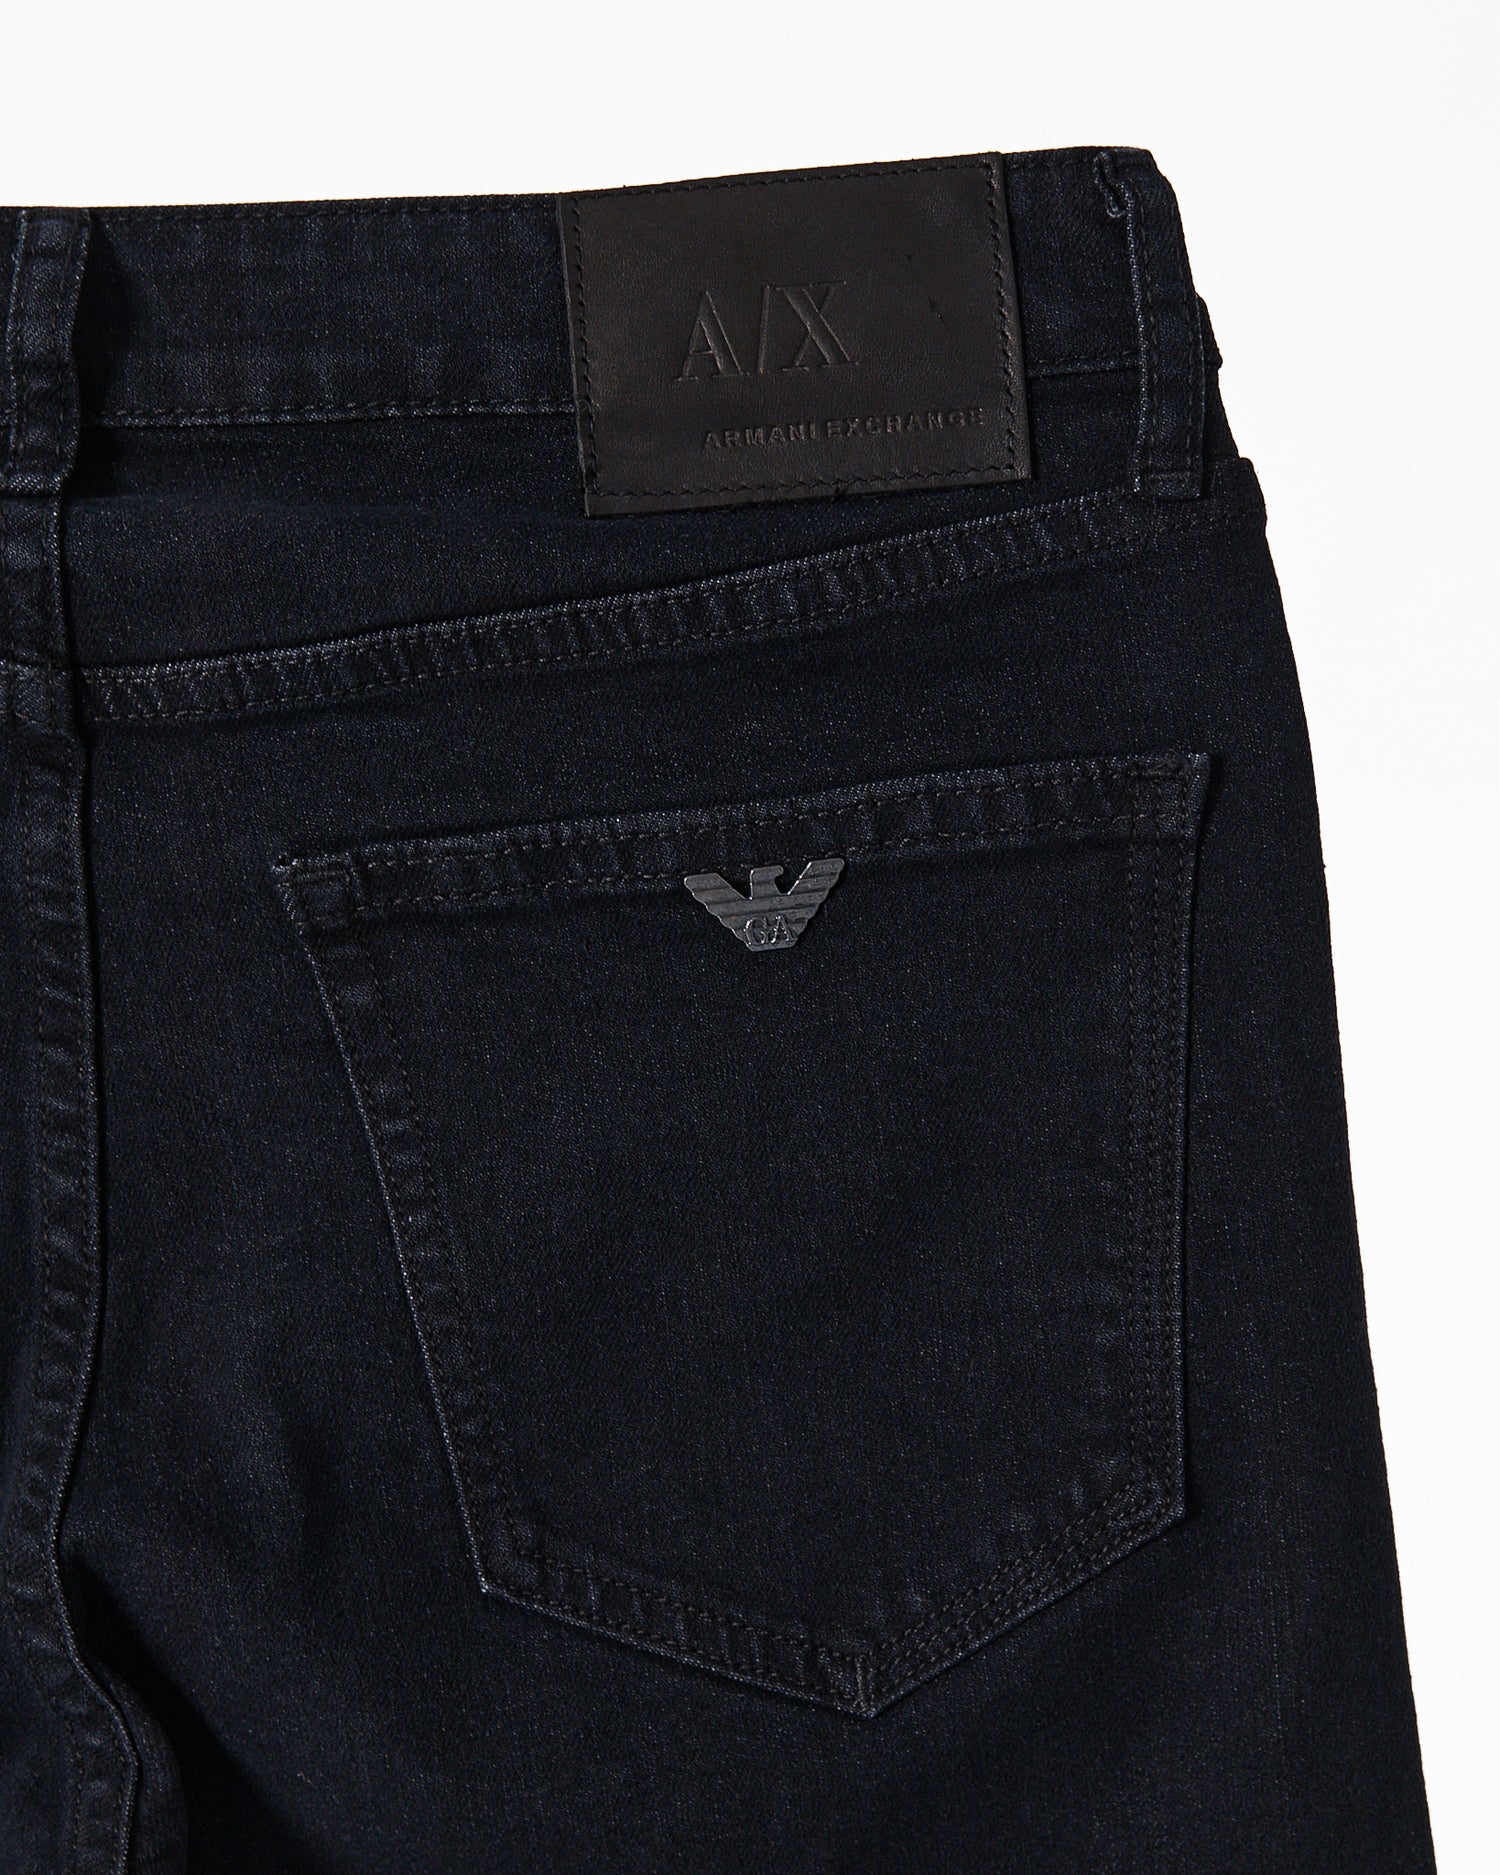 ARM Men Black Skinny Fit  Jeans 23.90